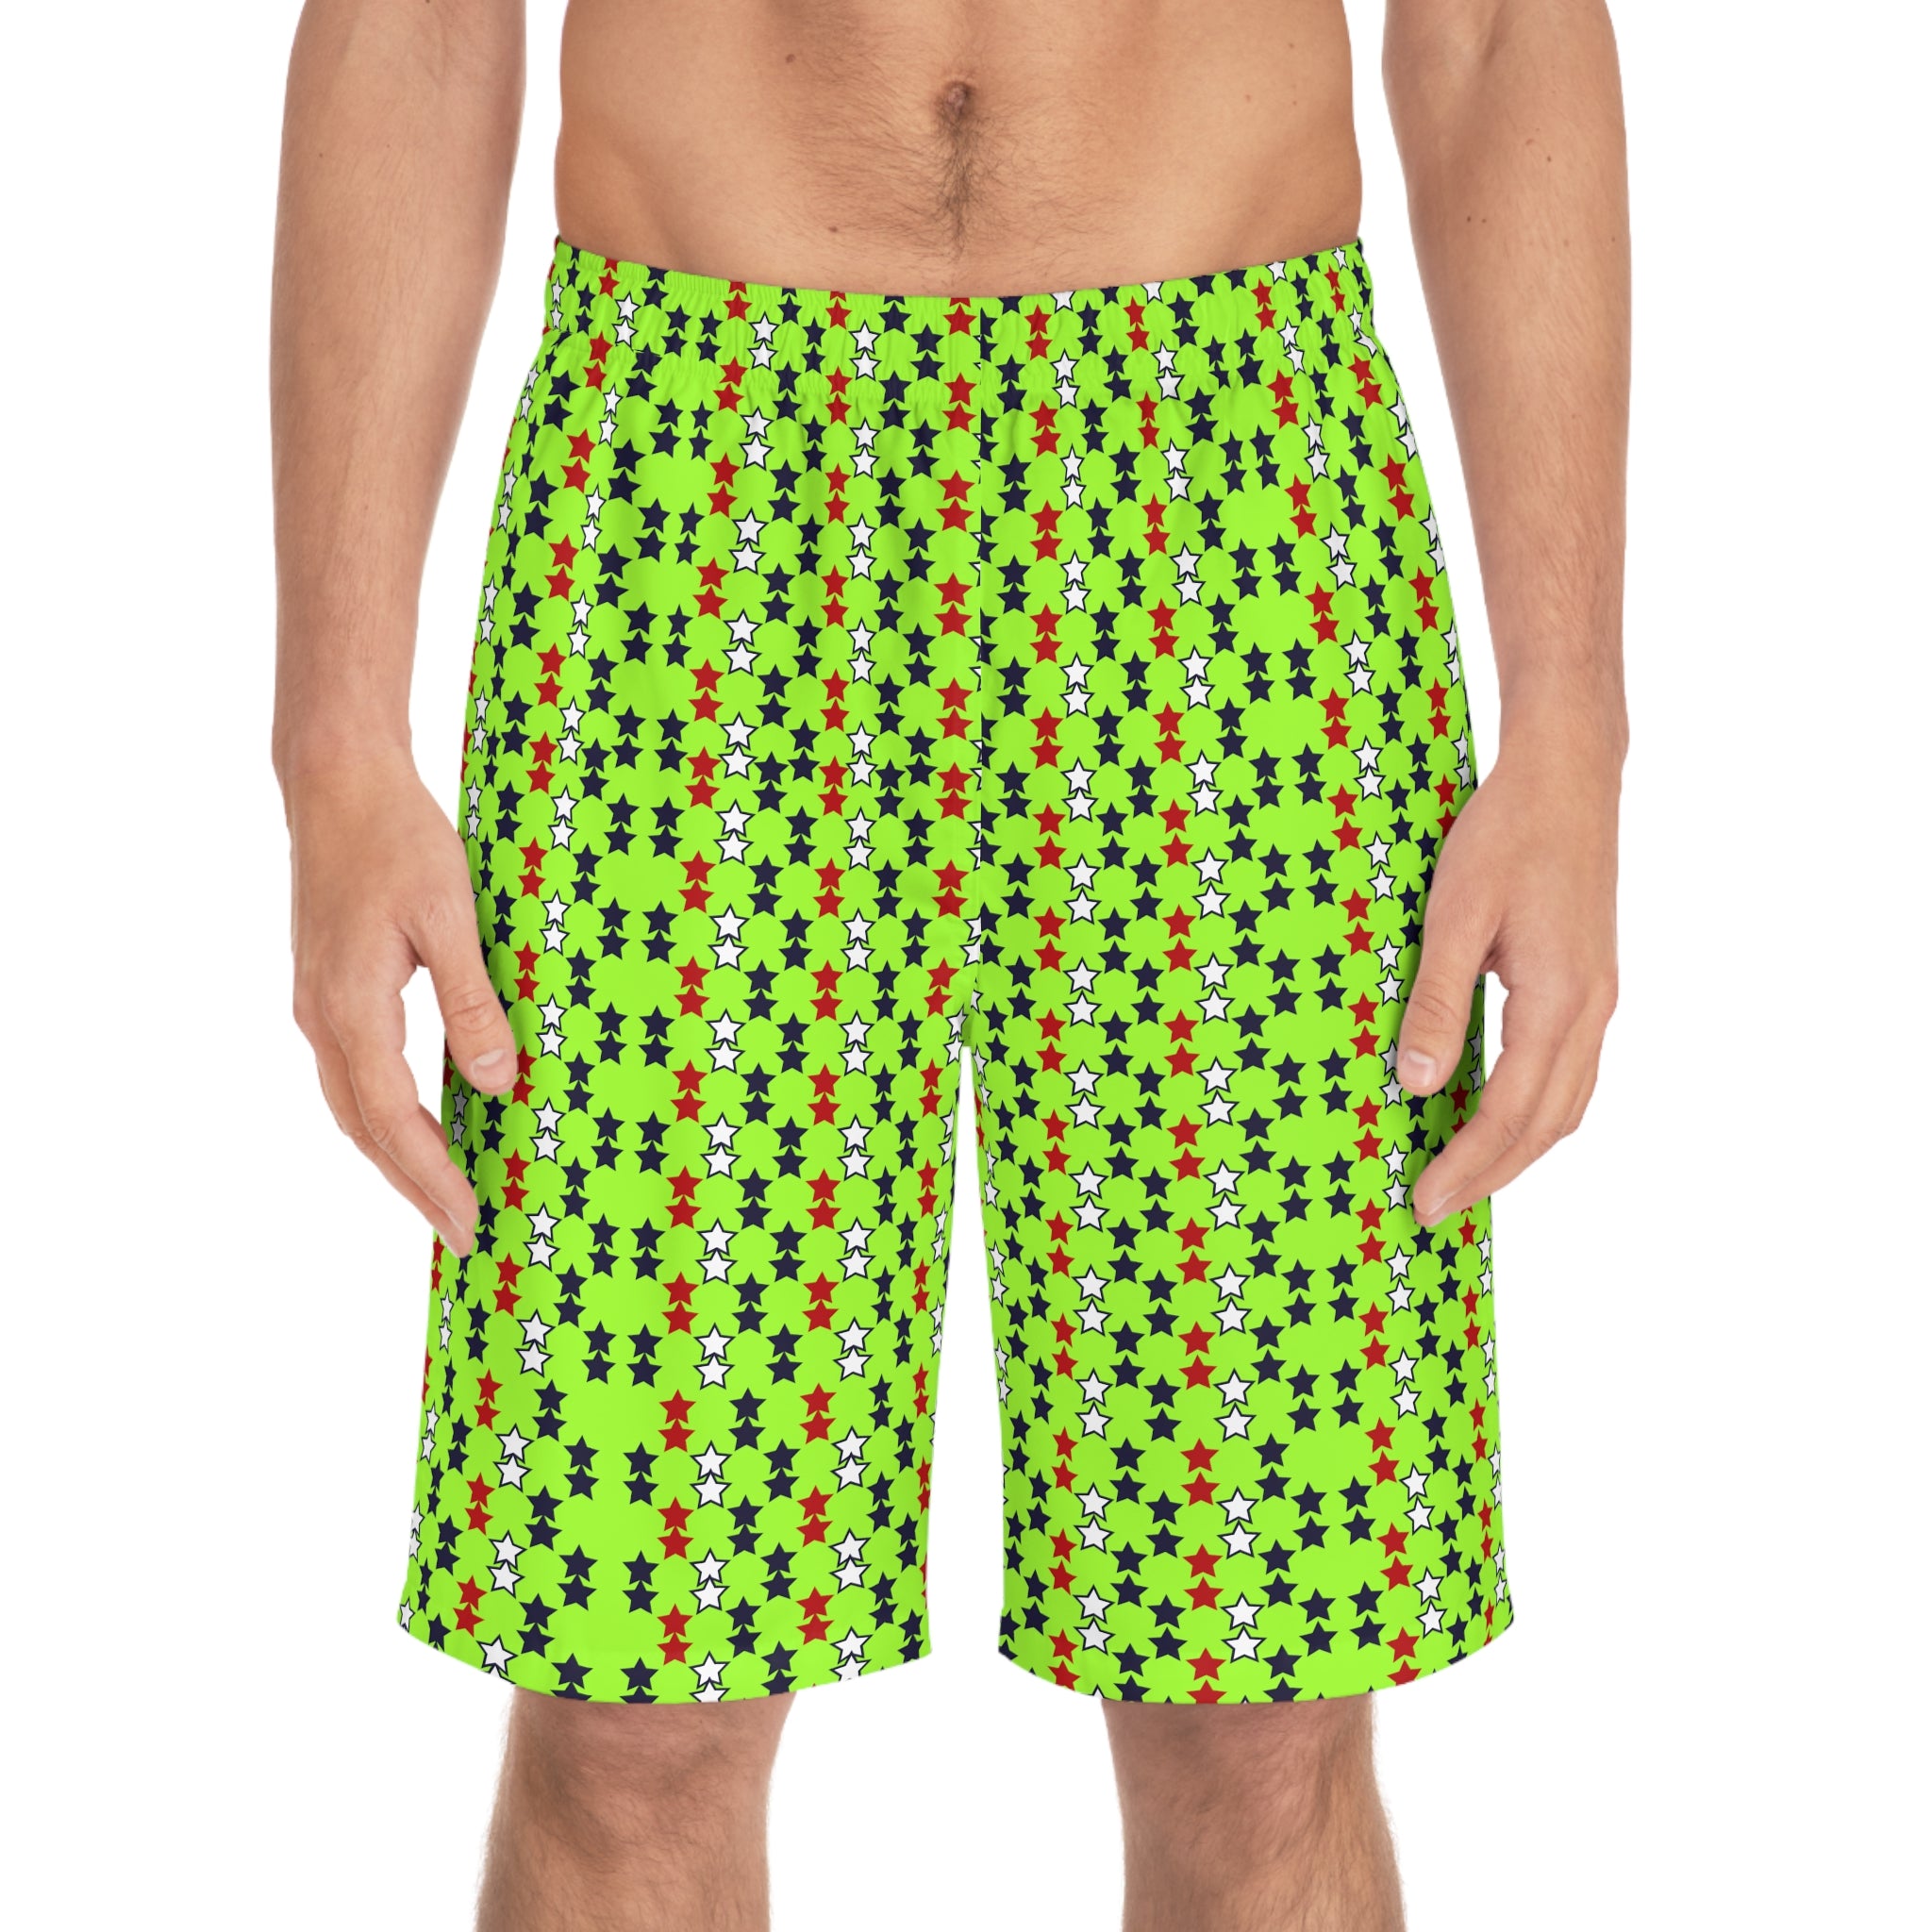 Lime green star print board shorts for men